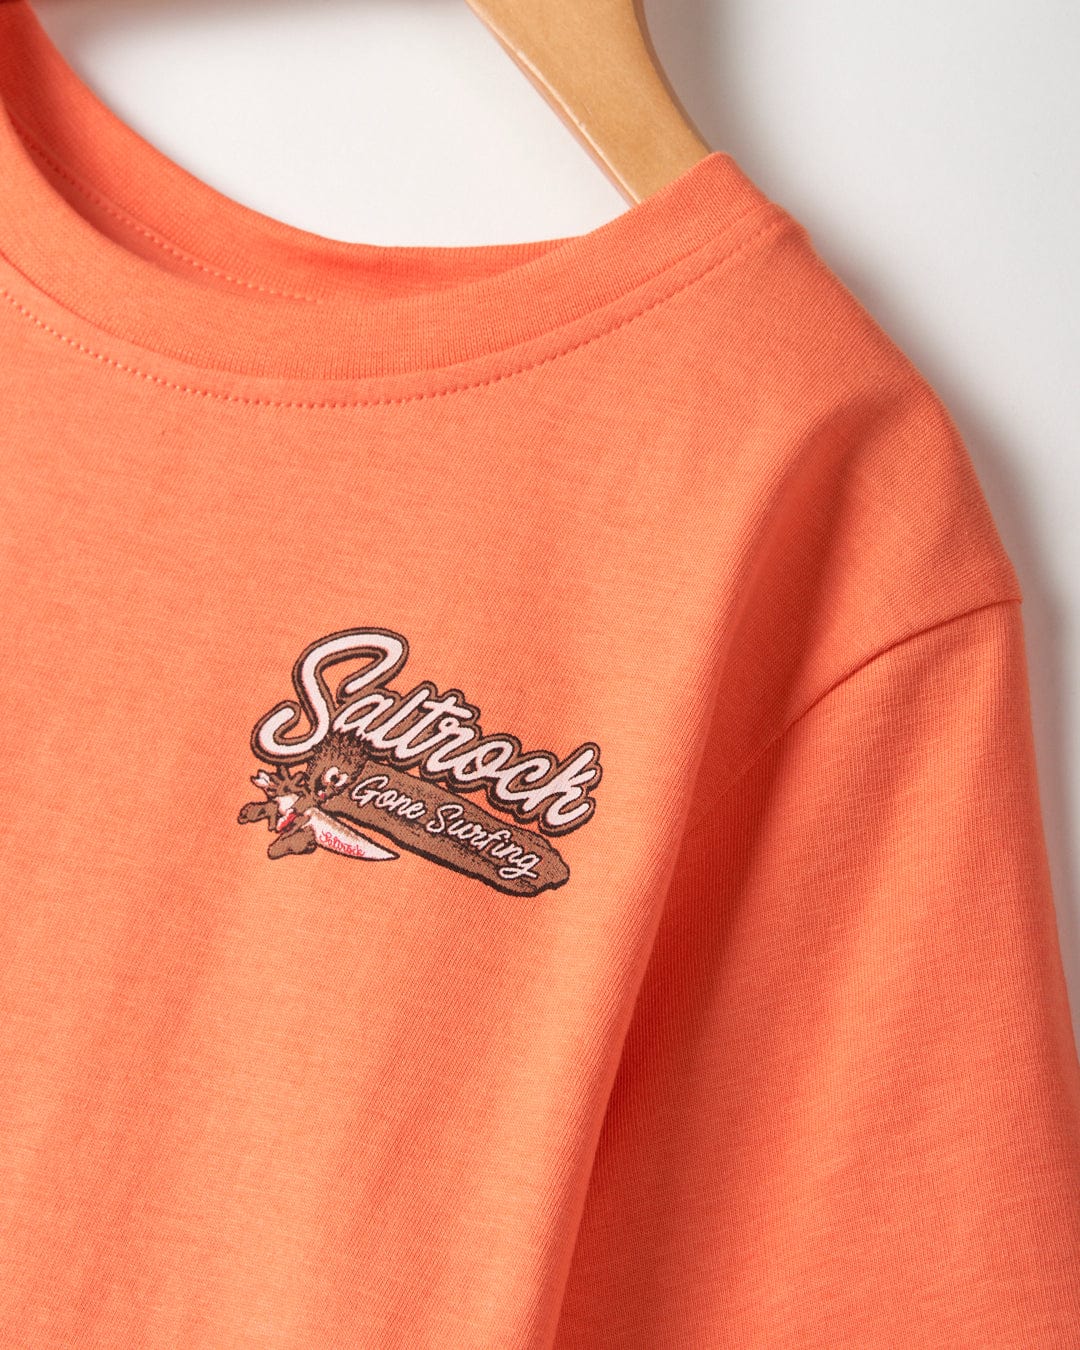 A machine washable Beach Signs Devon - Kids Short Sleeve T-Shirt in orange with a Saltrock branding logo on it.